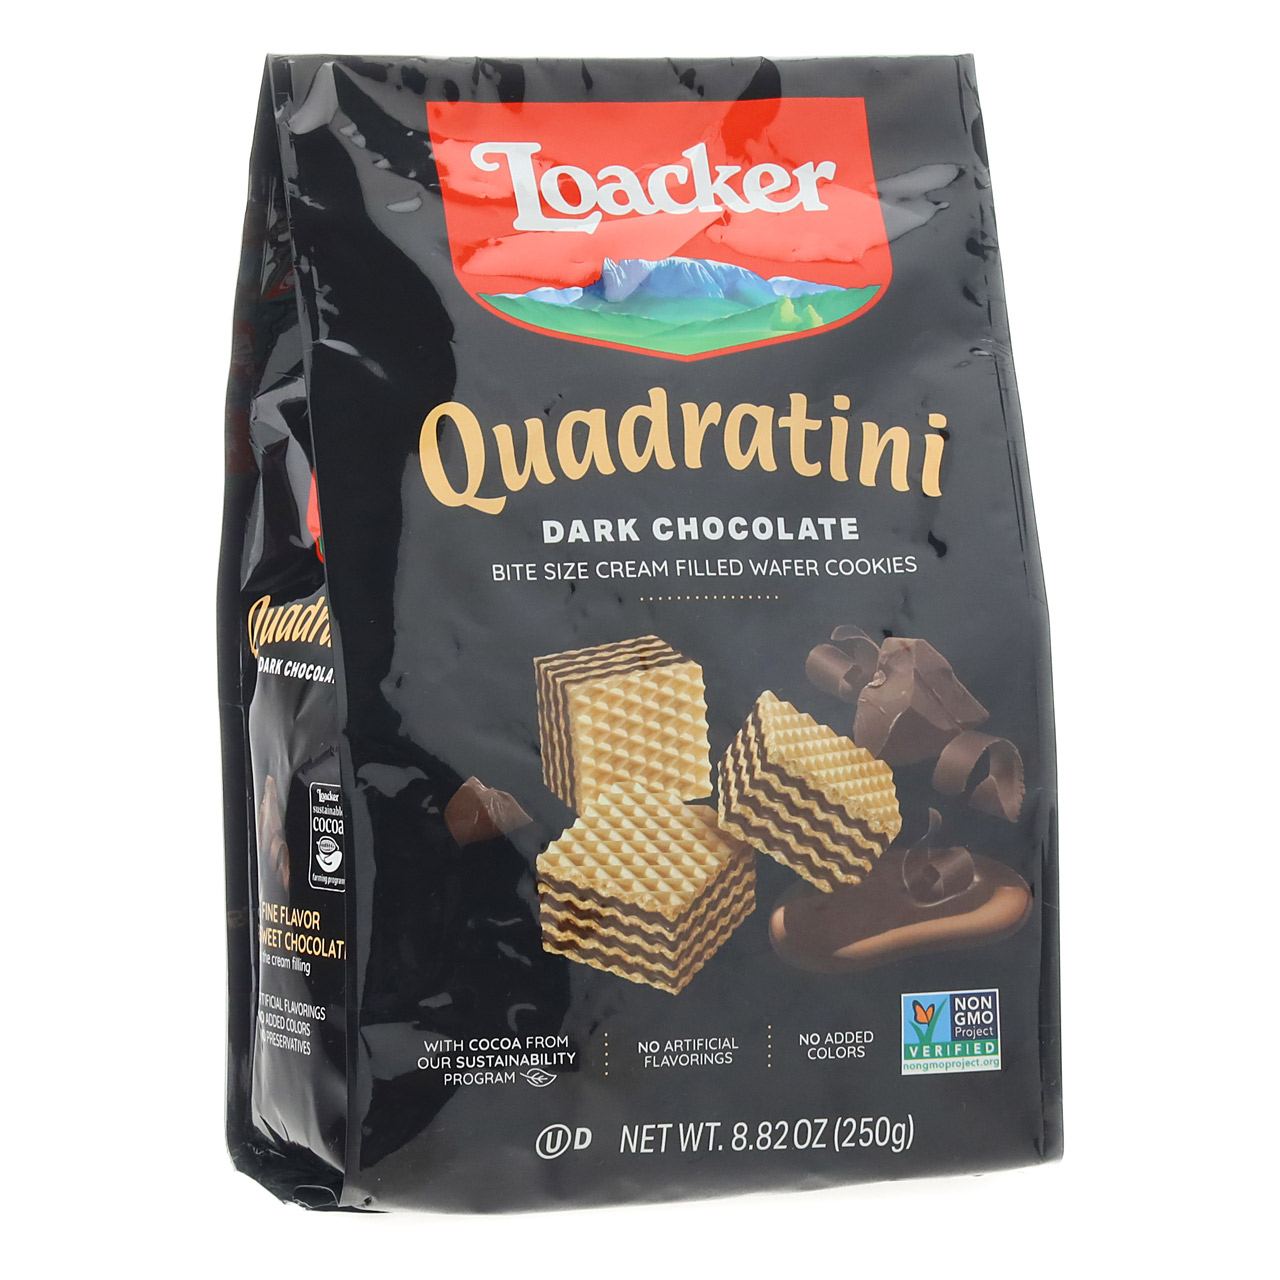 Quadratini Dark Chocolate, creme-filled wafer cookies,8.82oz | Loacker